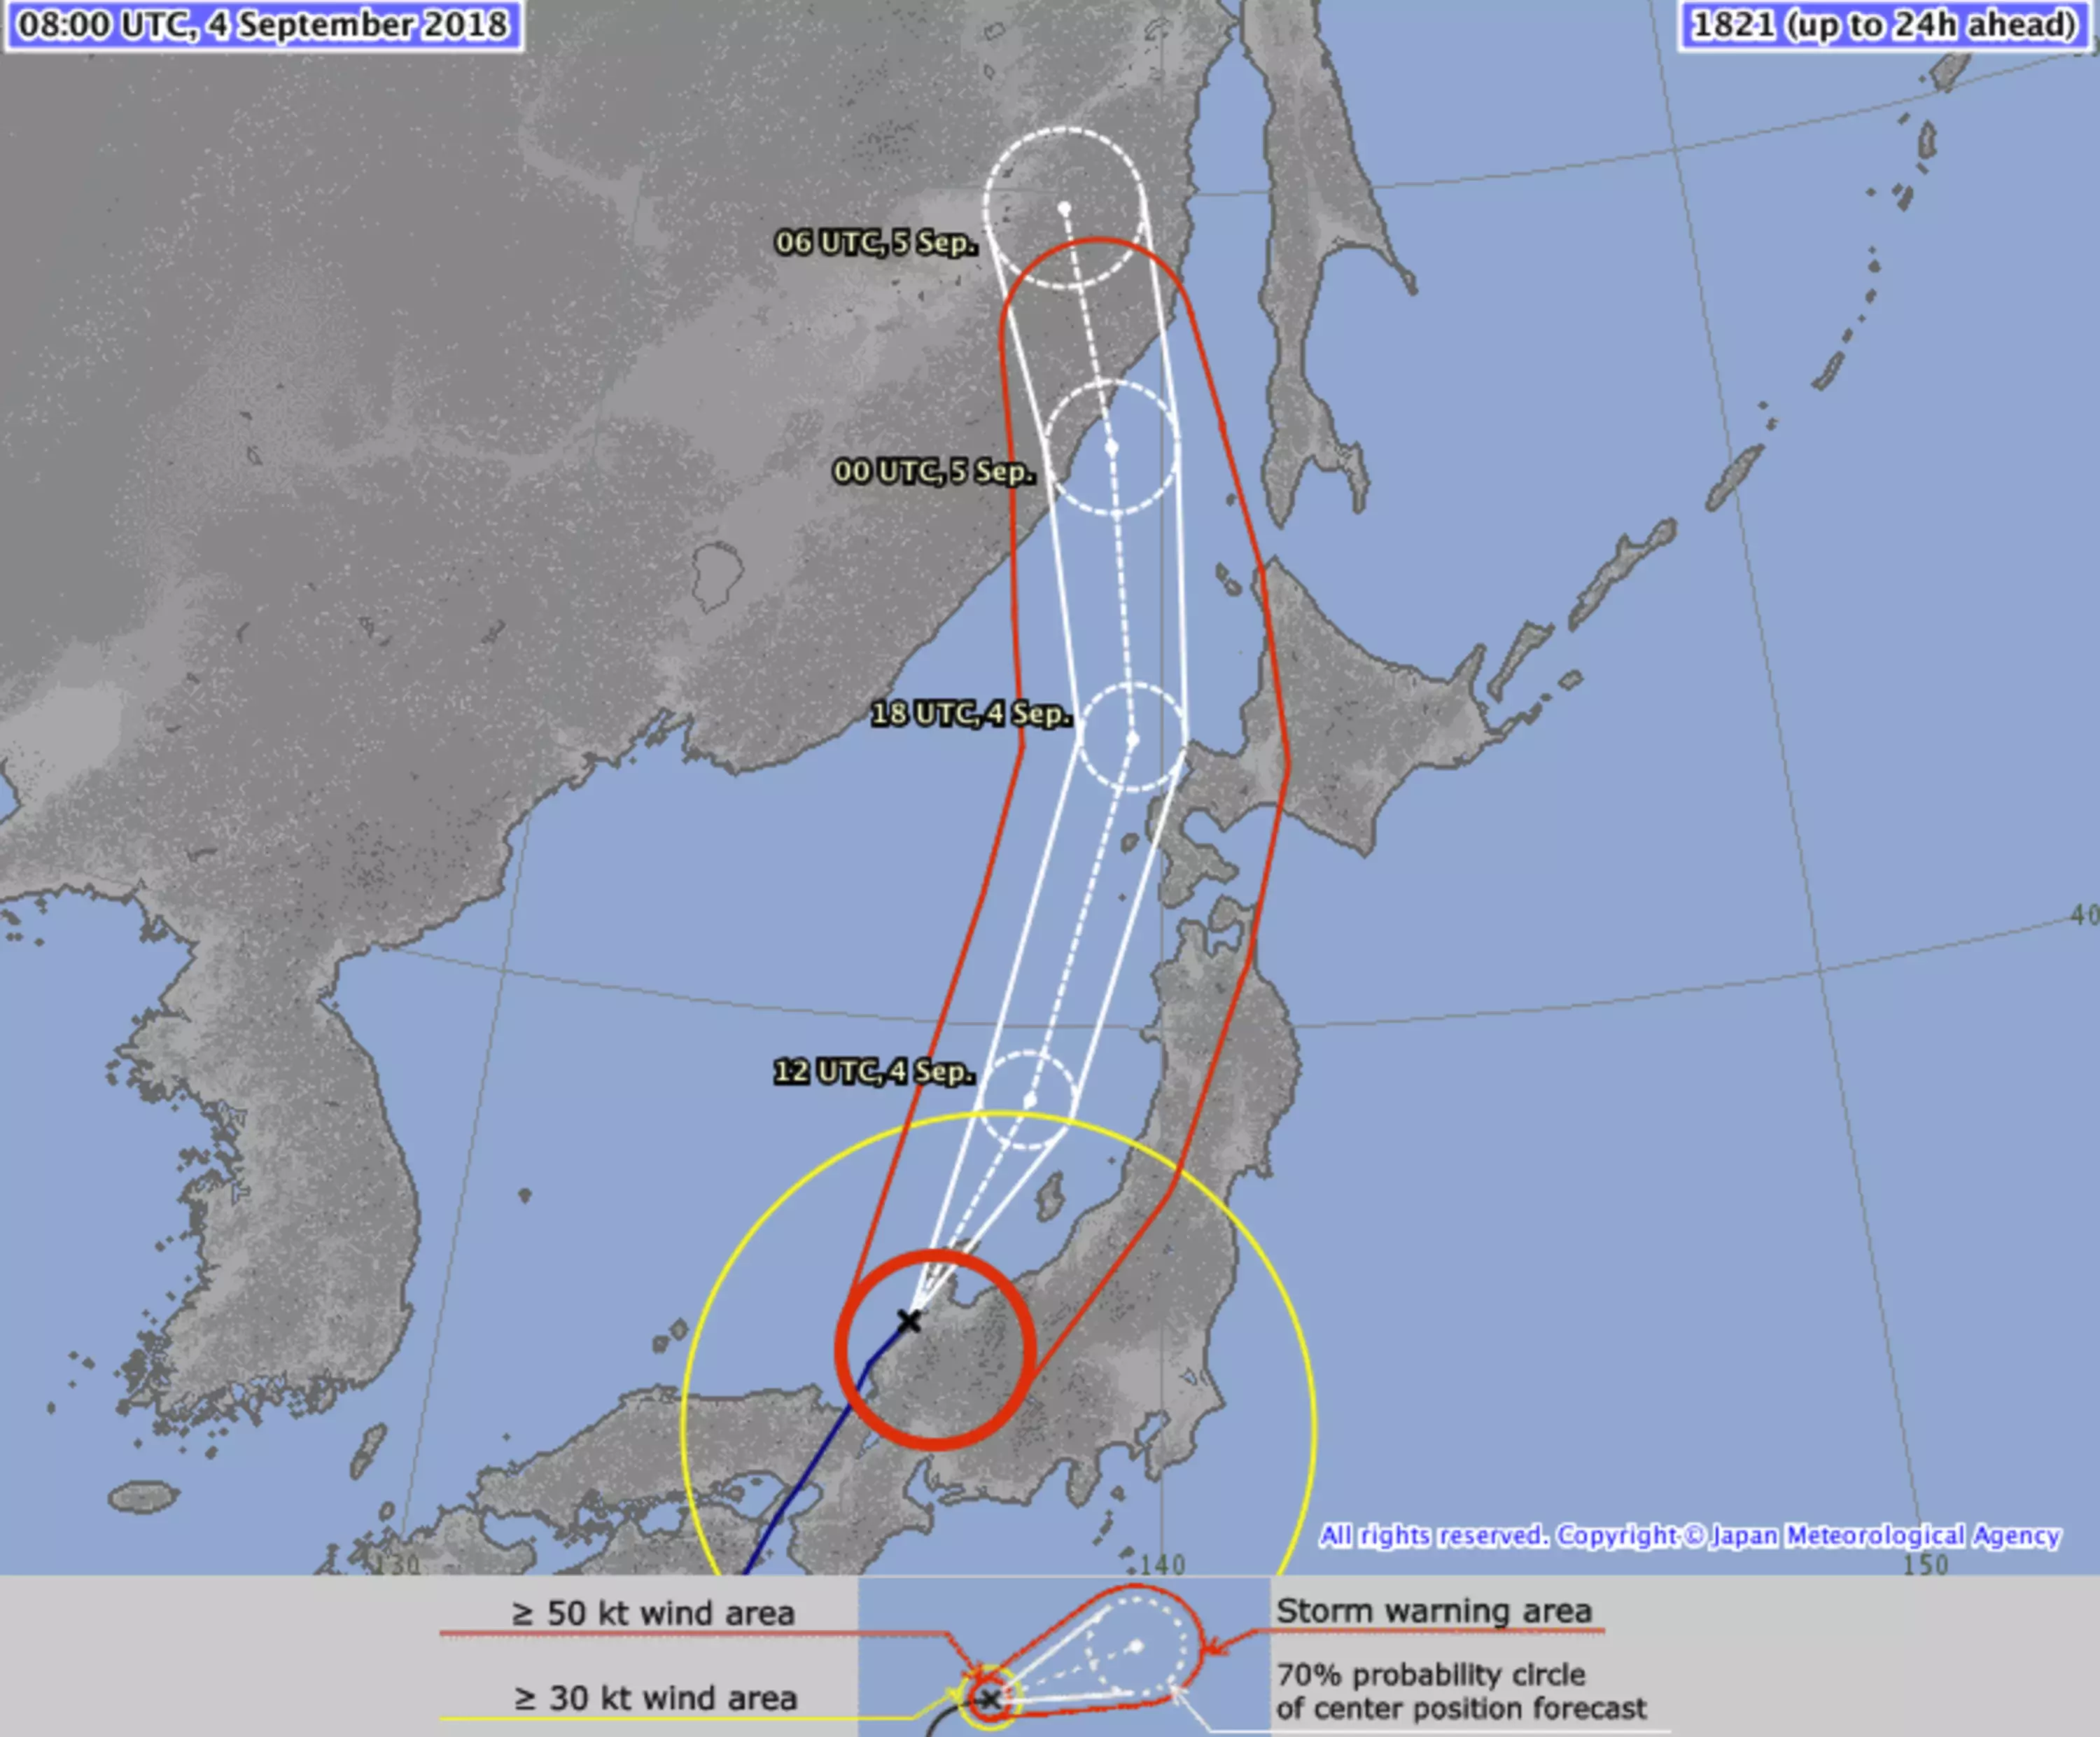 Forecast track of of Typhoon Jebi.